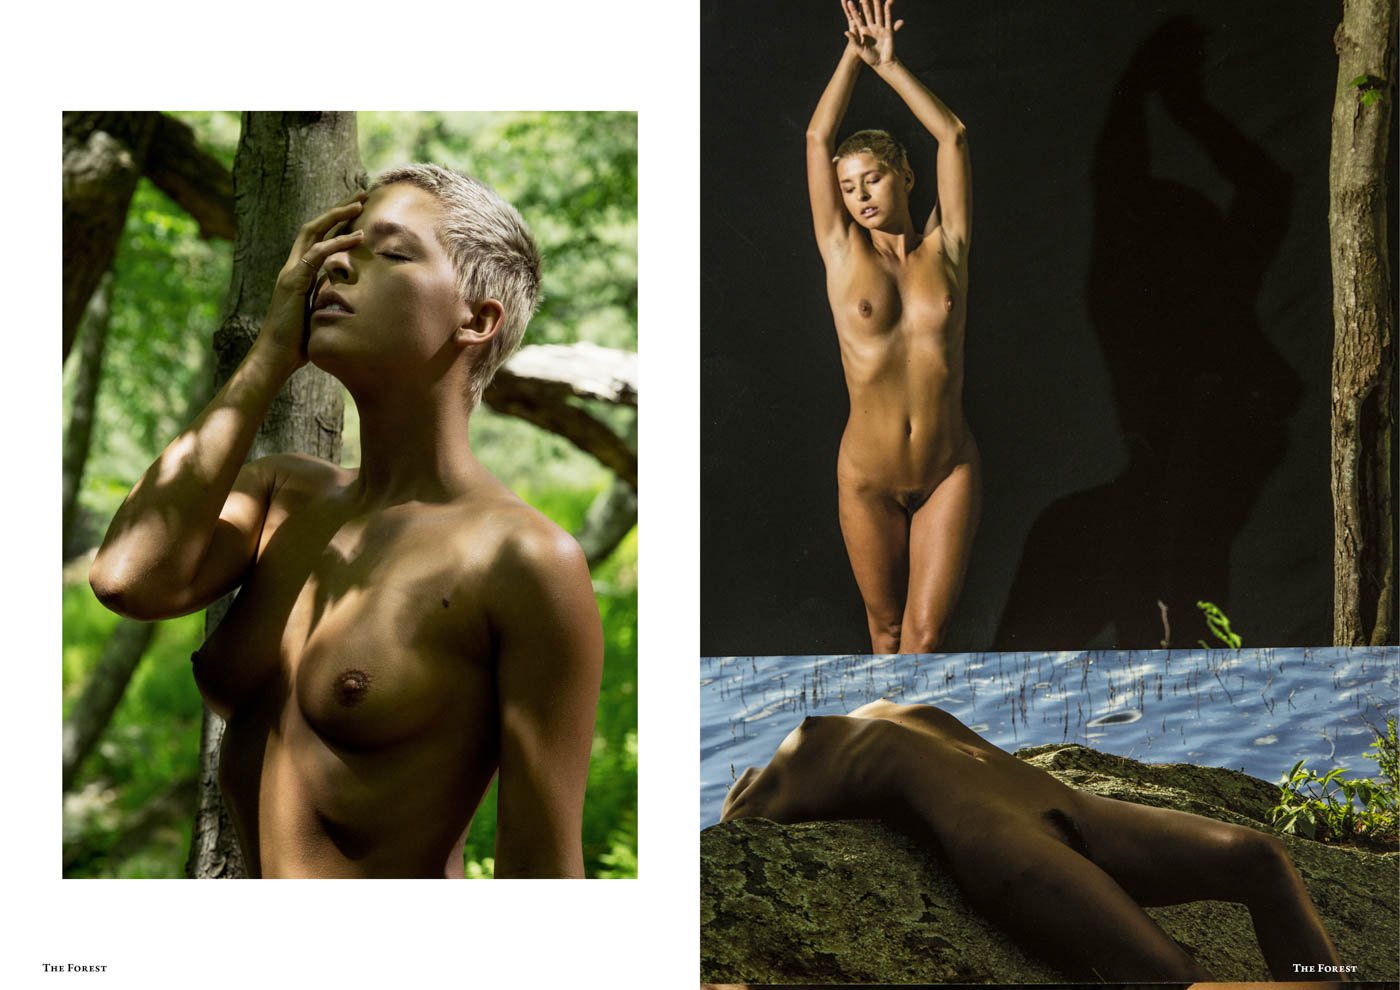 Marisa-Papen-Naked-9-thefappeningblog.com_-1.jpg